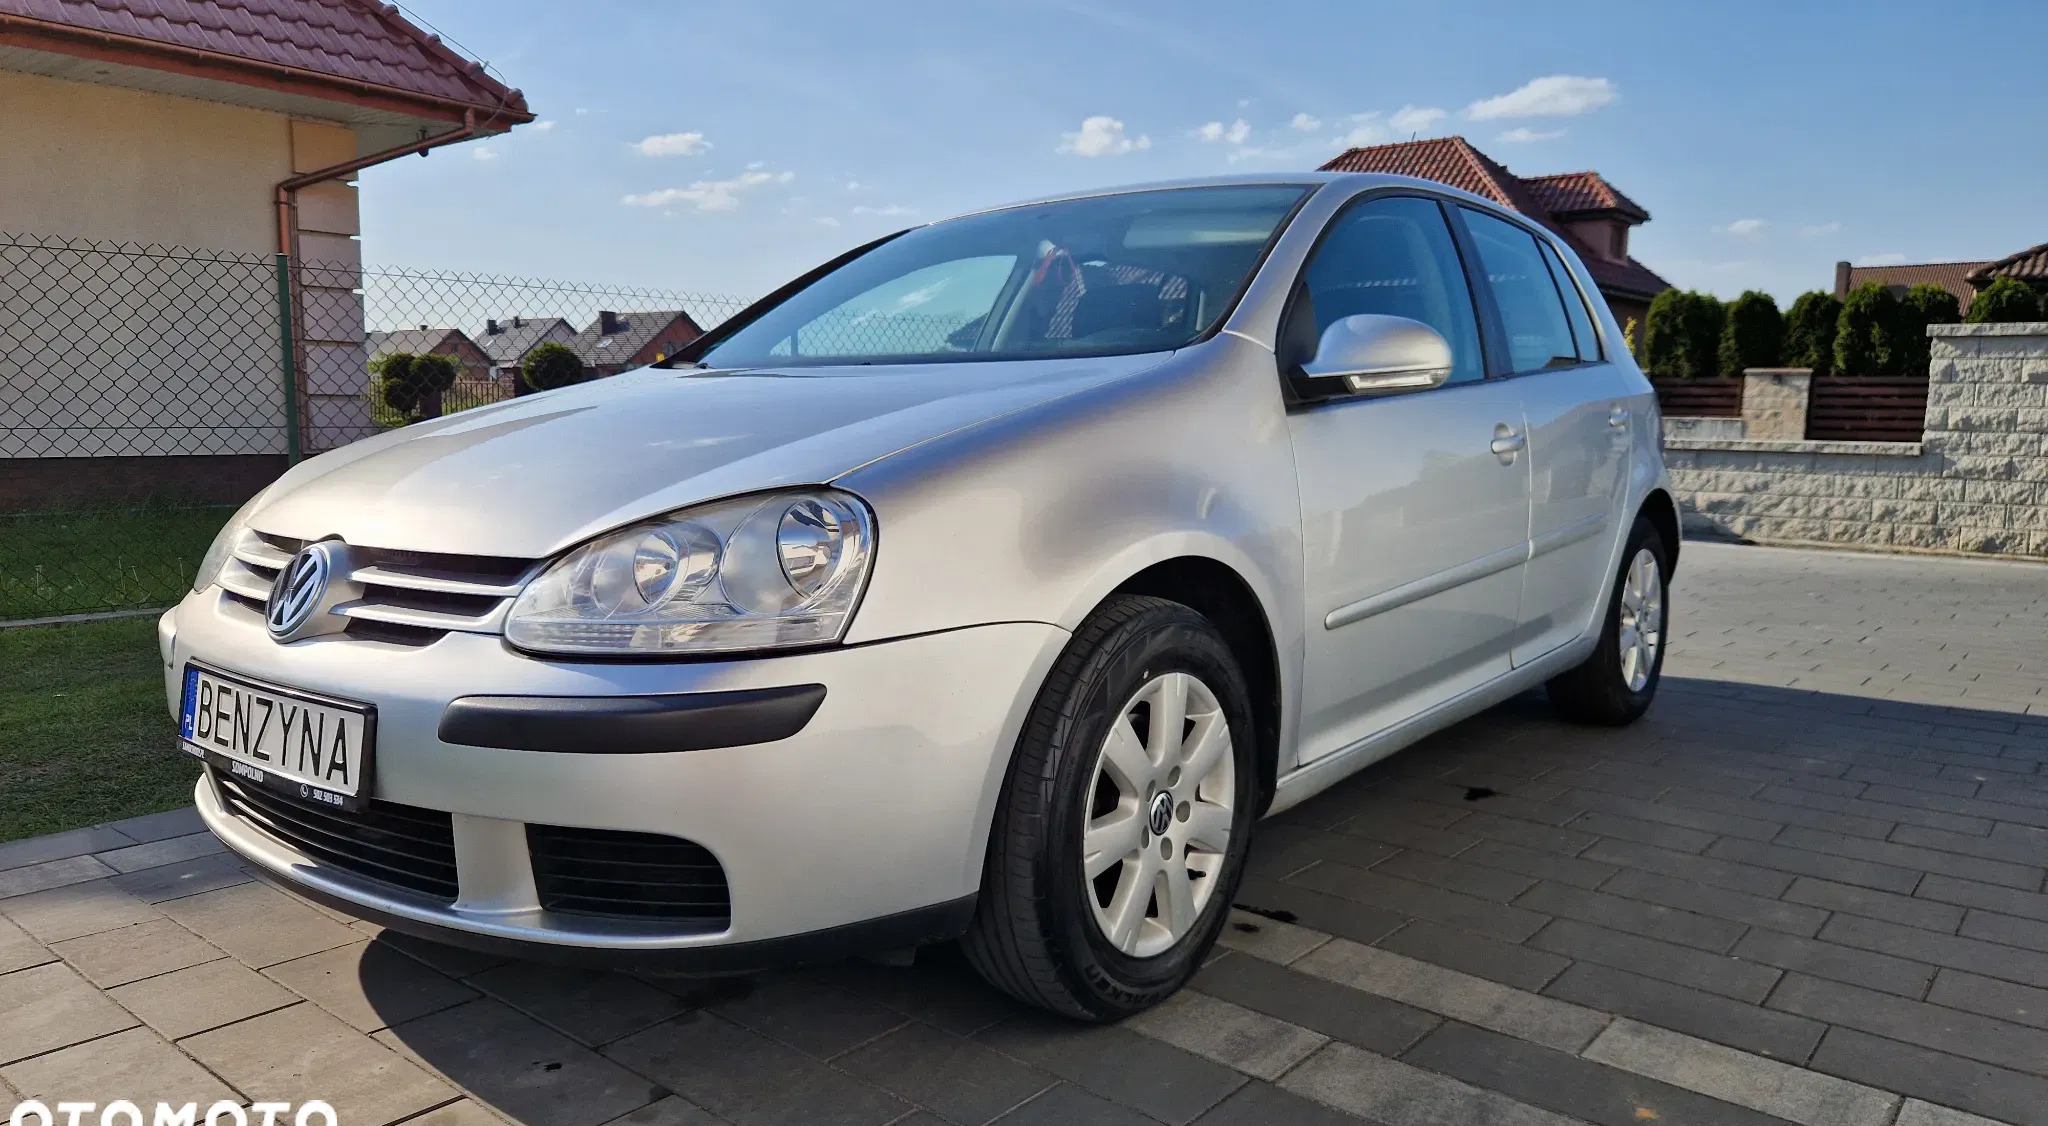 sompolno Volkswagen Golf cena 13900 przebieg: 280000, rok produkcji 2005 z Sompolno